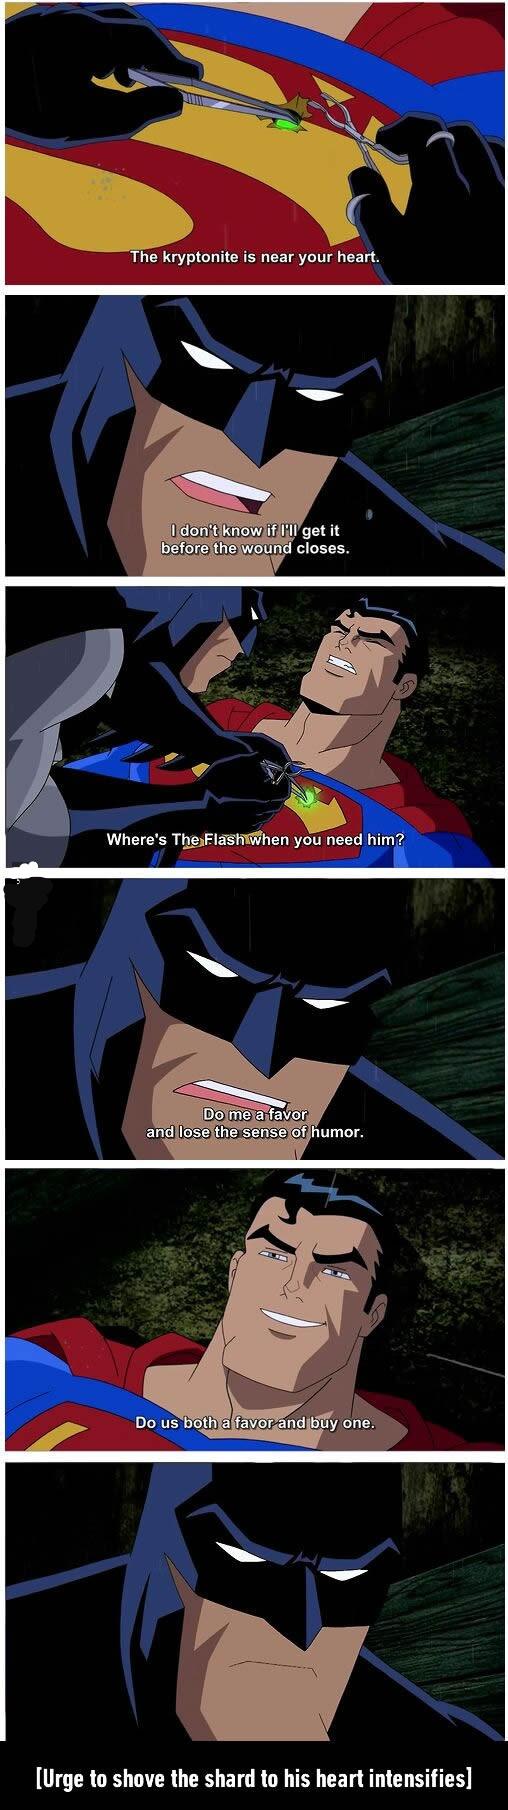 Better ending then Batman Vs Superman